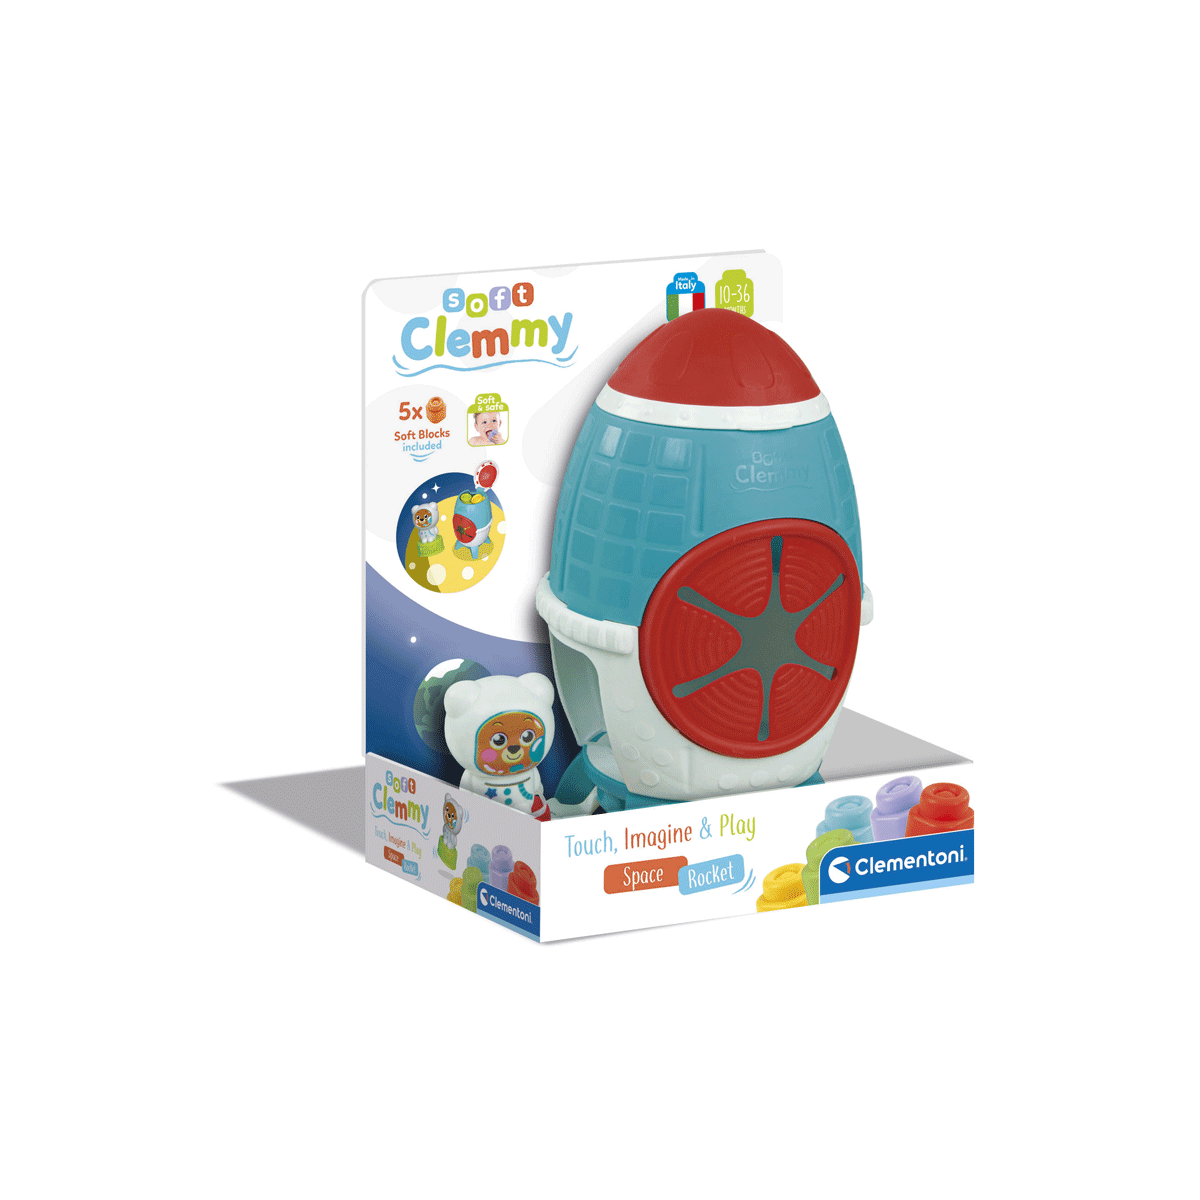 Clementoni - soft clemmy - touch, explore and play sensory rocket, mattoncini morbidi - CLEMMY